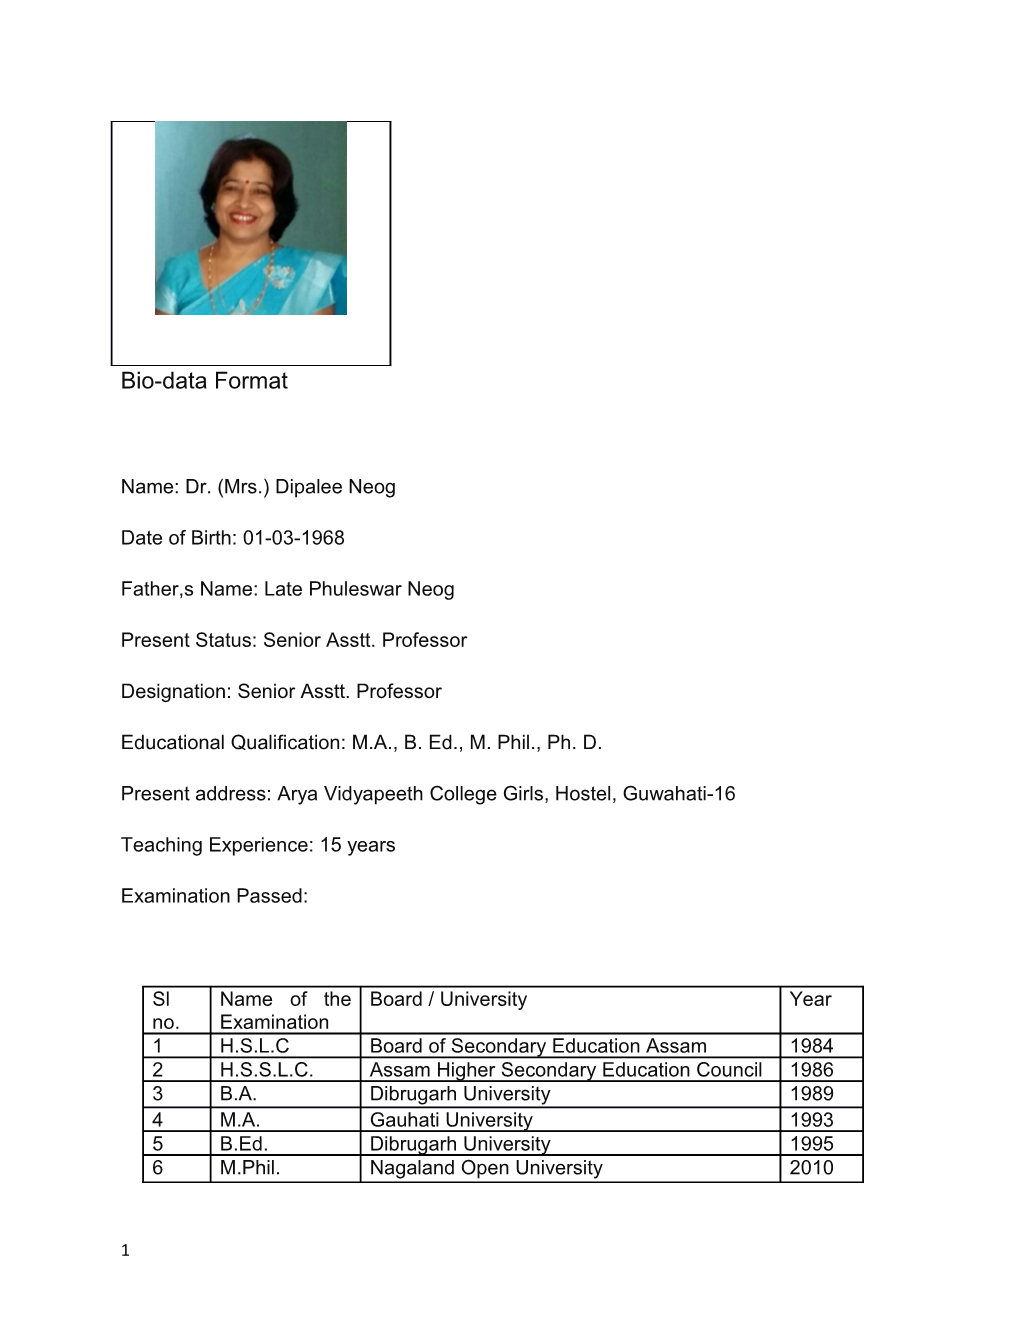 Name: Dr. (Mrs.) Dipalee Neog